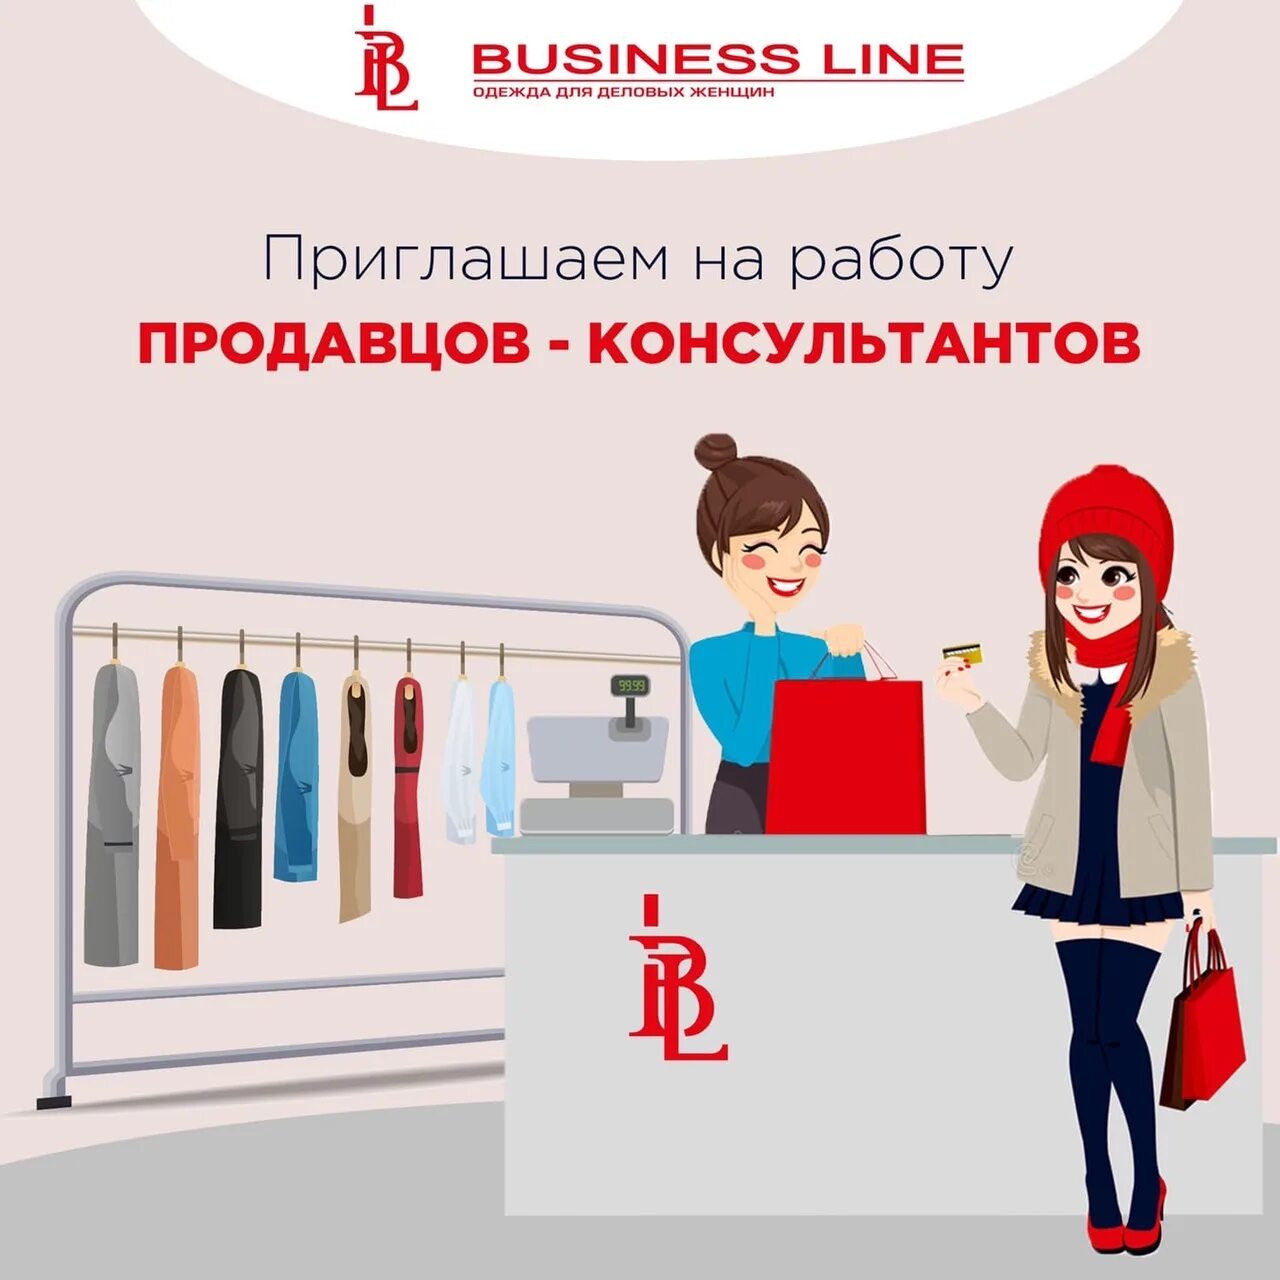 Бизнес лайн одежда интернет магазин. Business line одежда каталог. Business line женская одежда интернет магазин. Бизнес лайн ульяновск